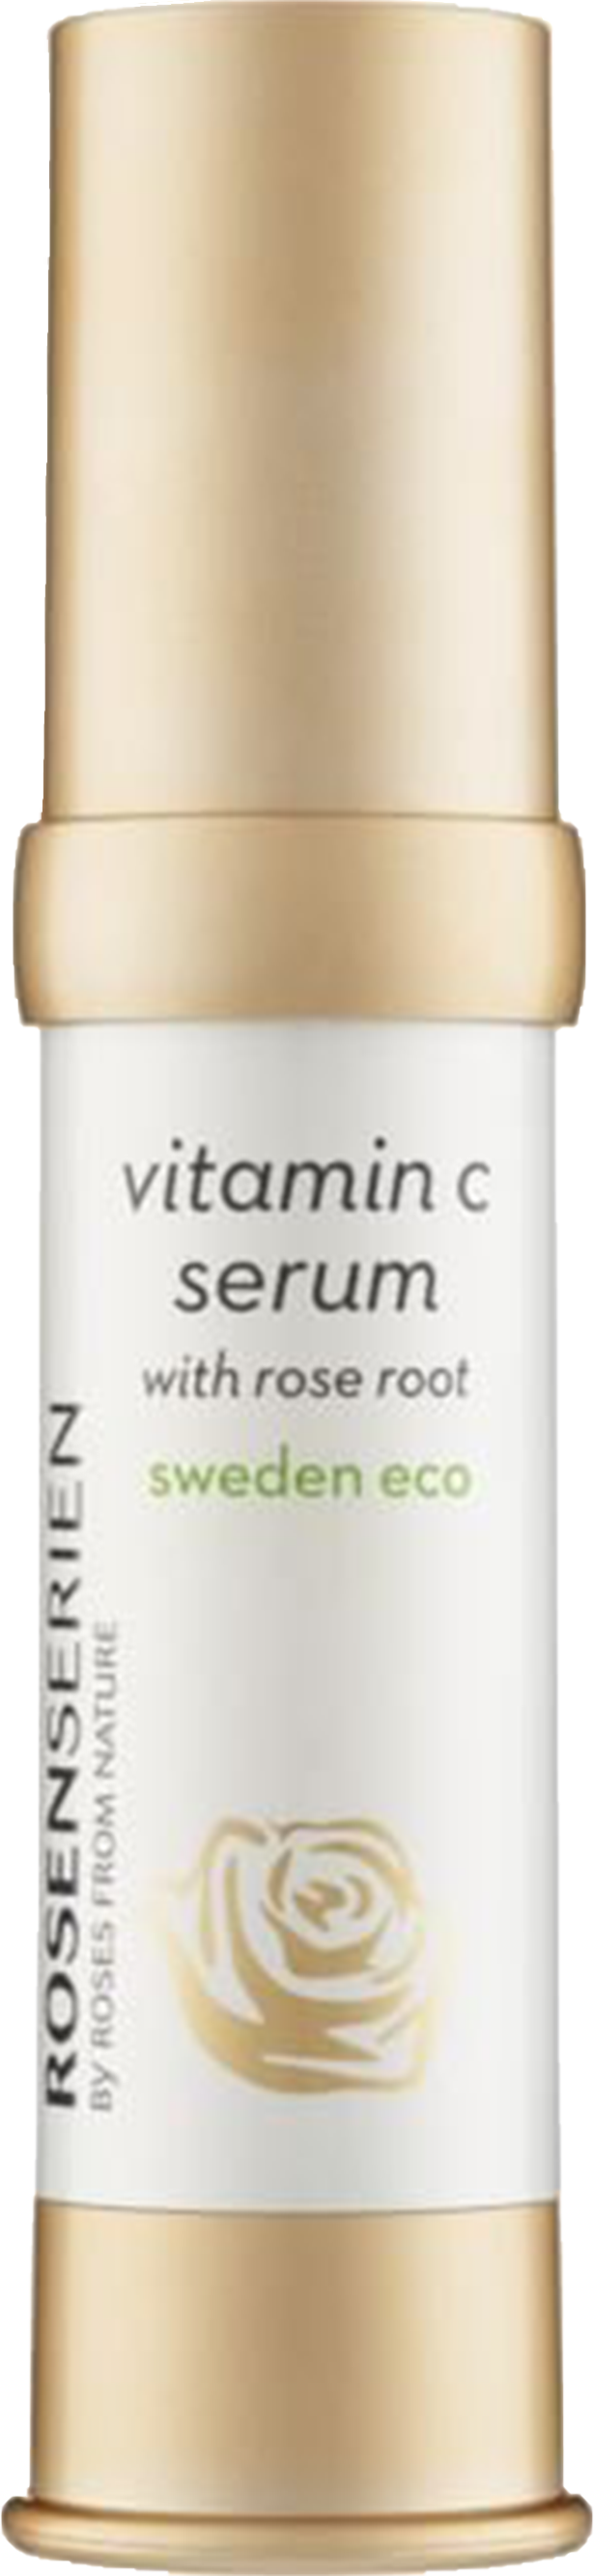 Rosenserien Vitamin C Serum Rose Root 20 ml